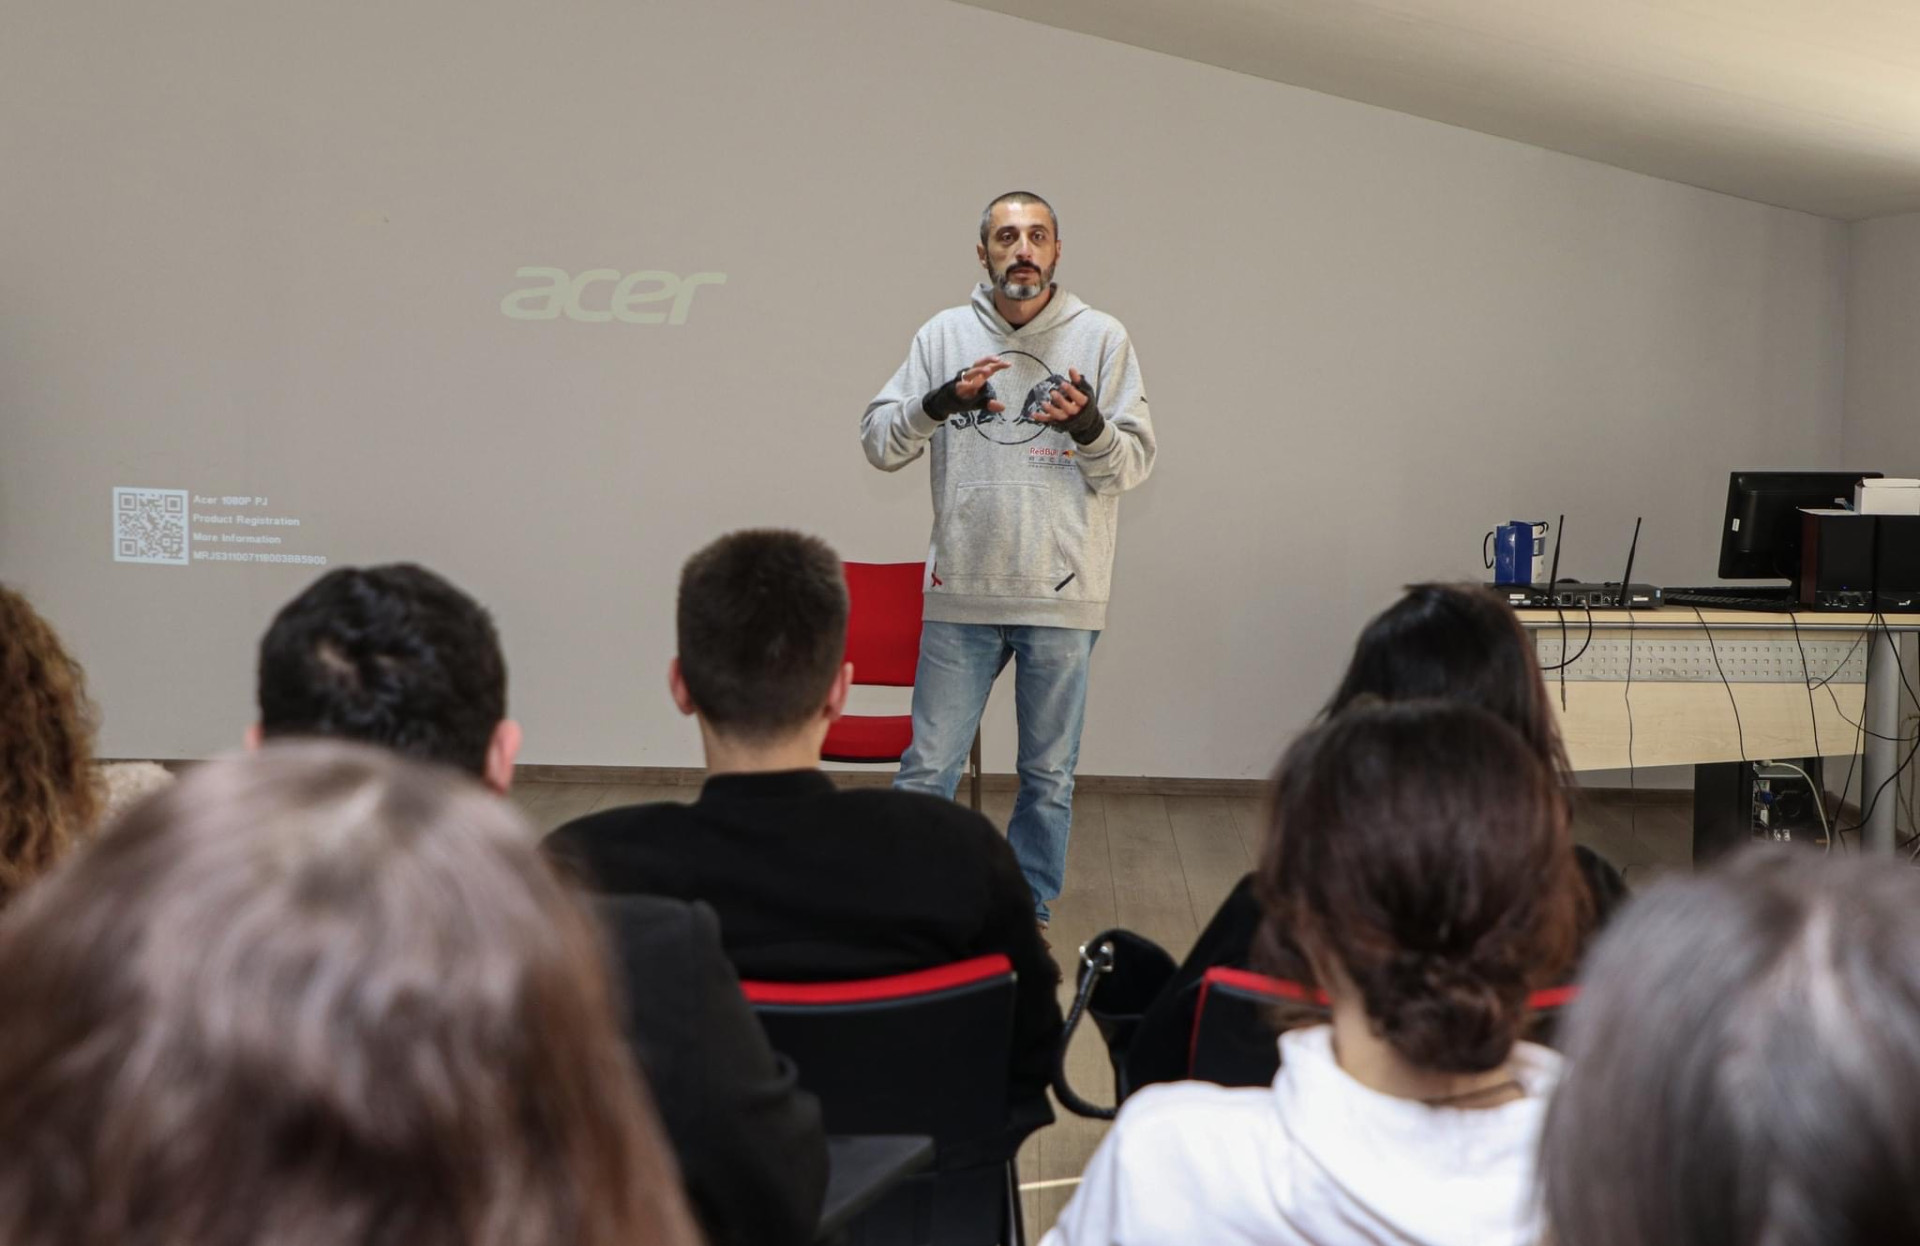 TV presenter Davit Kashiashvili's public lecture at IBSU